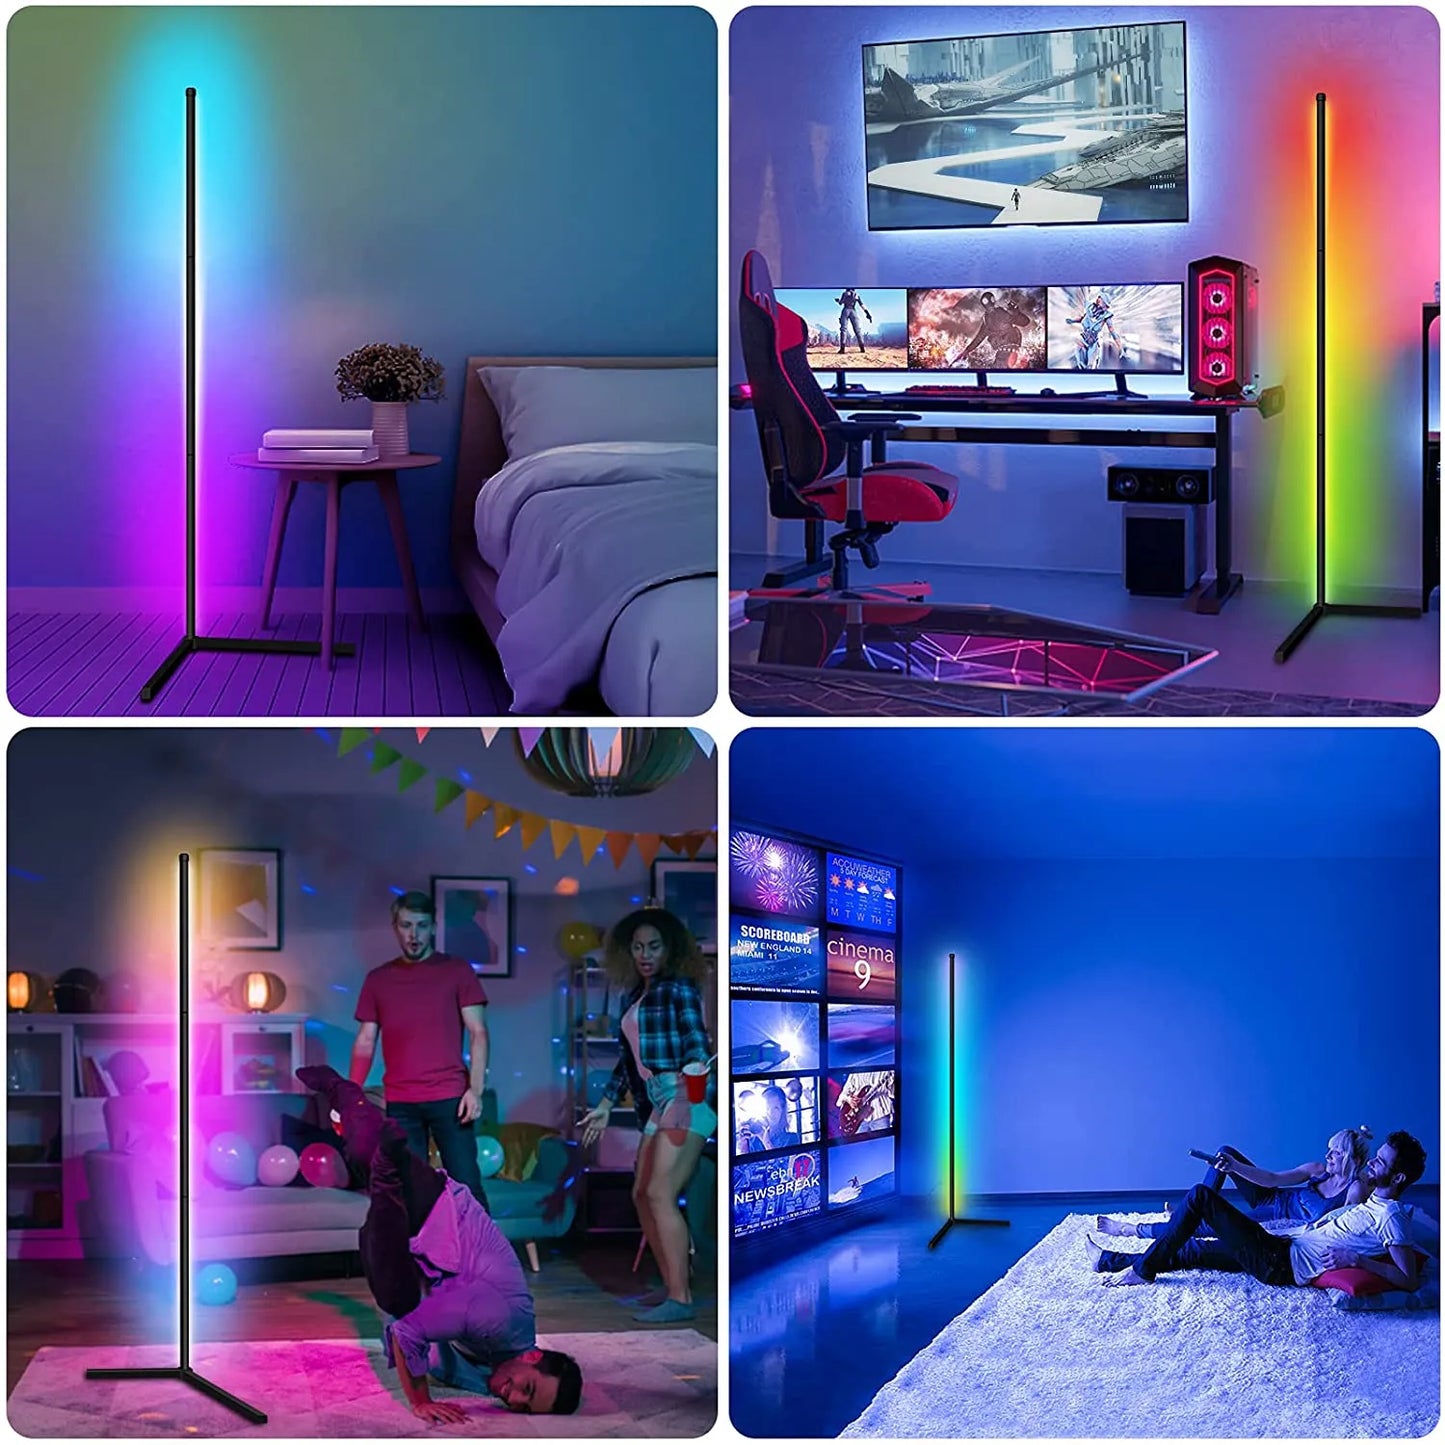 Home Decor Multi Color Smart APP Bluetooth LED Mood Corner Floor Light Lamp